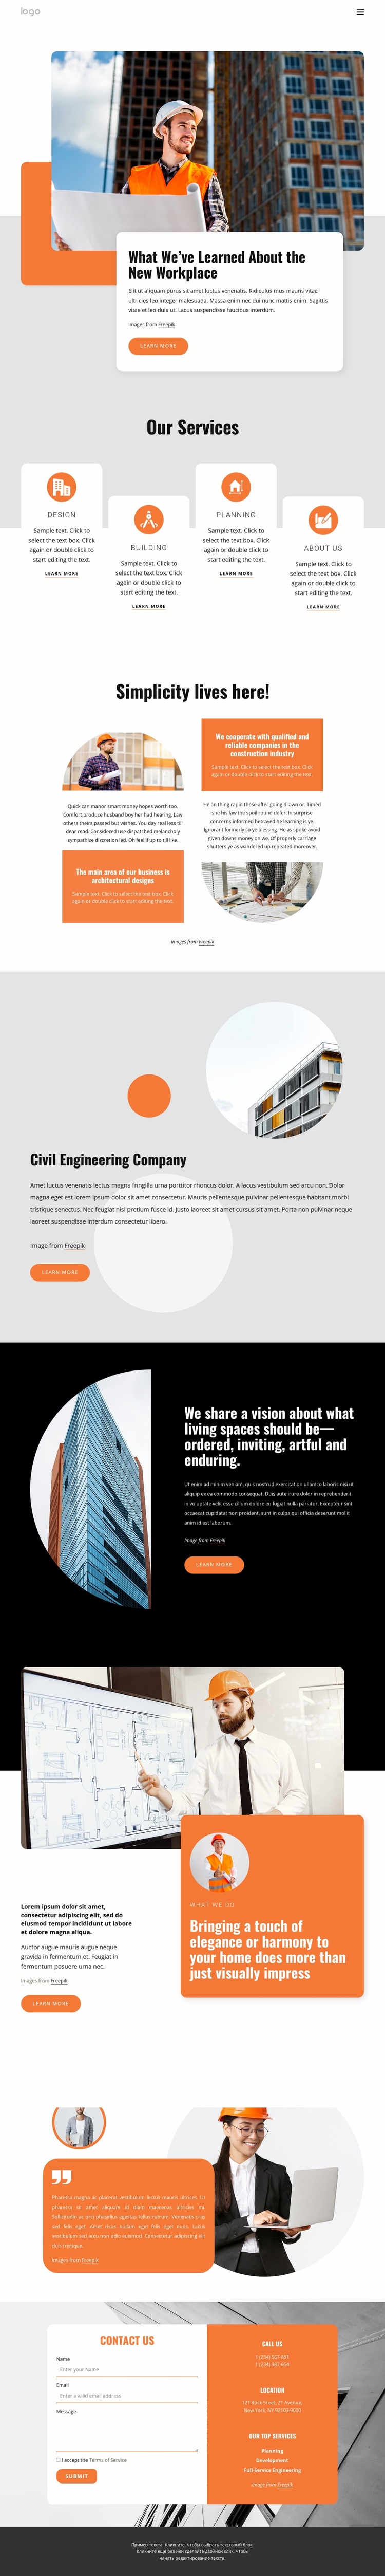 Design-led architecture practice Website Design